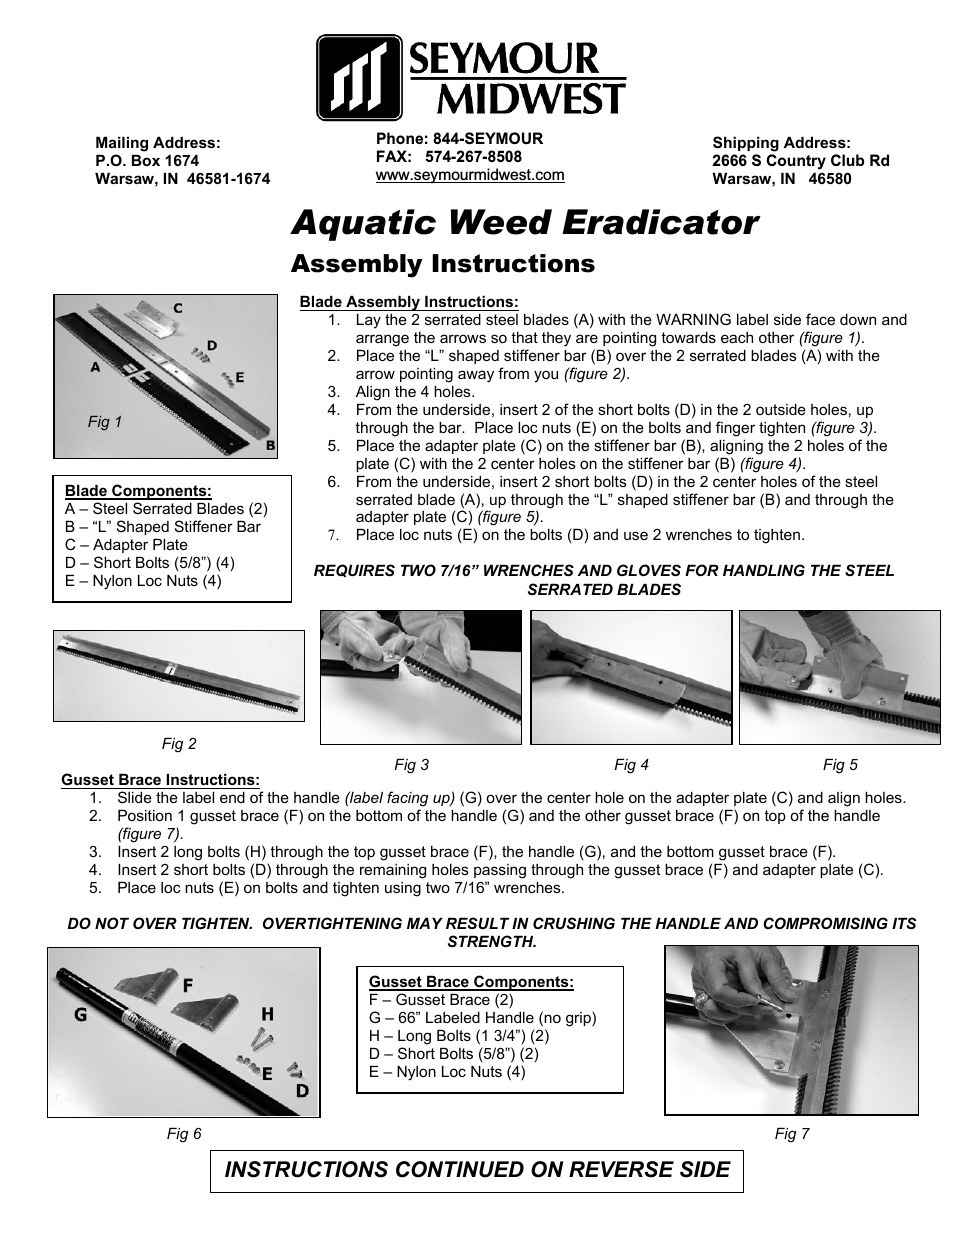 Aquatic Weed Eradicator [AWE](PK90107)